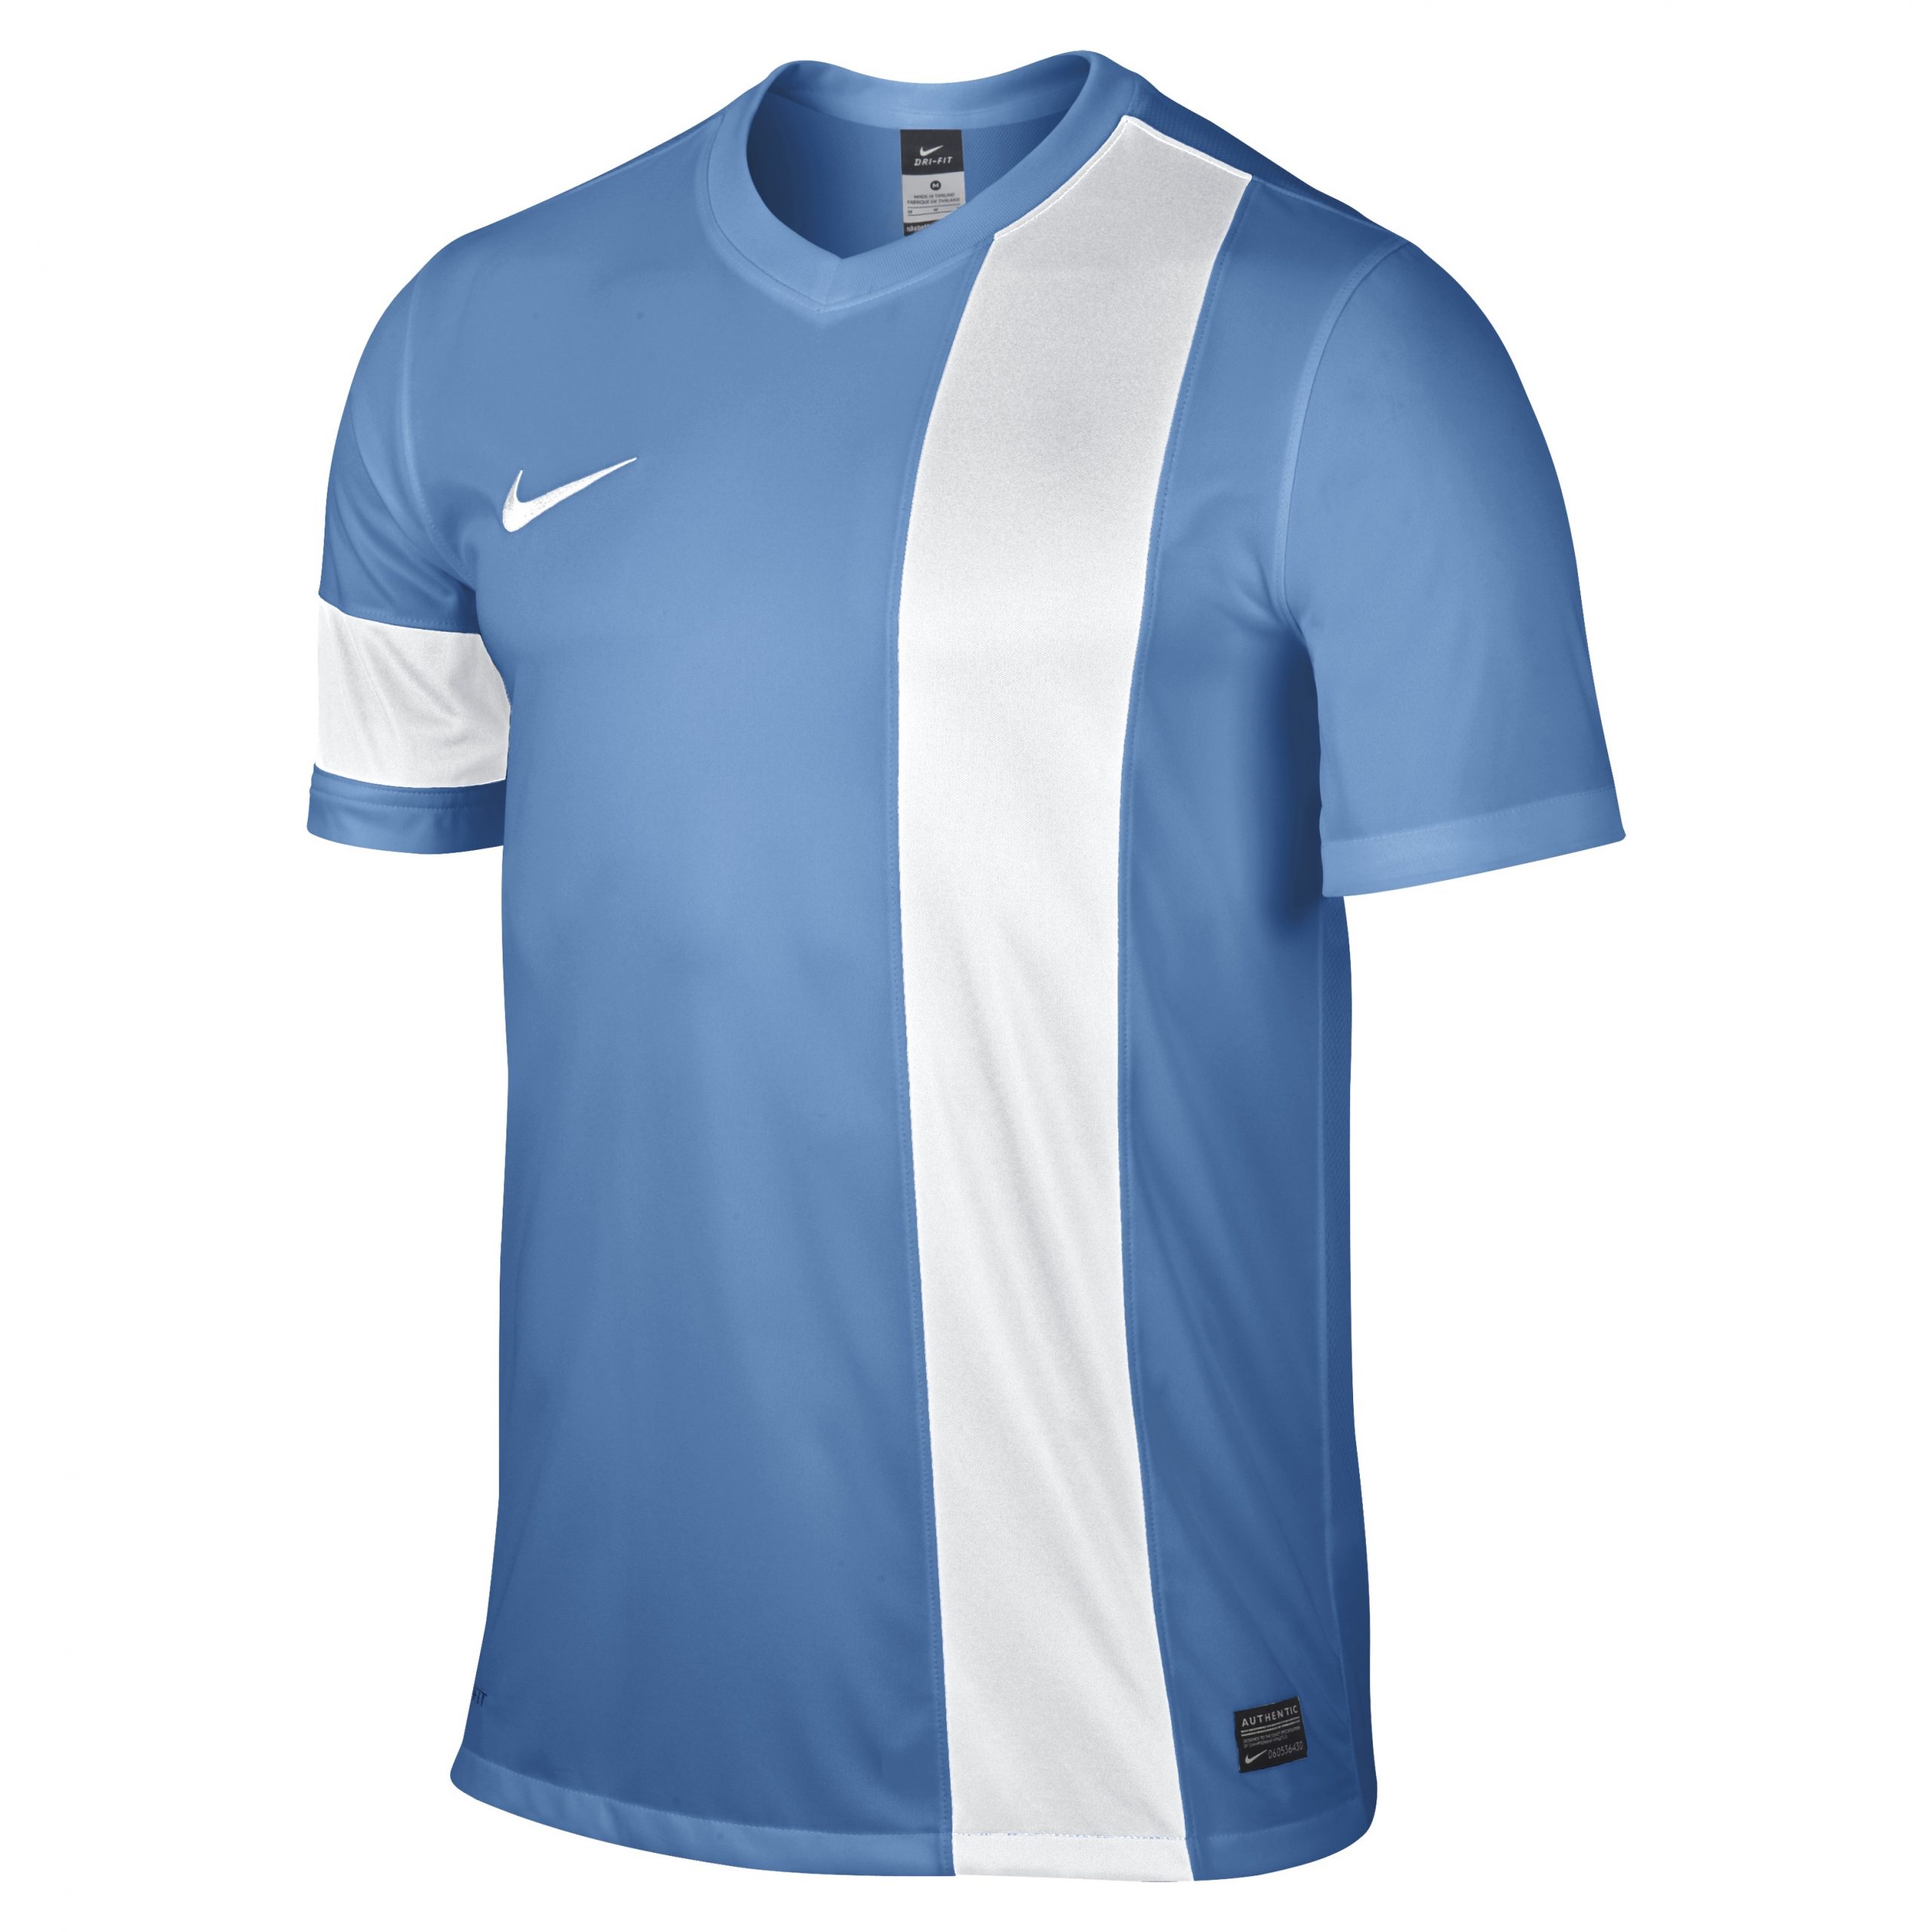 Nike Stripe III Jersey (Light Blue/White) - The Football Factory